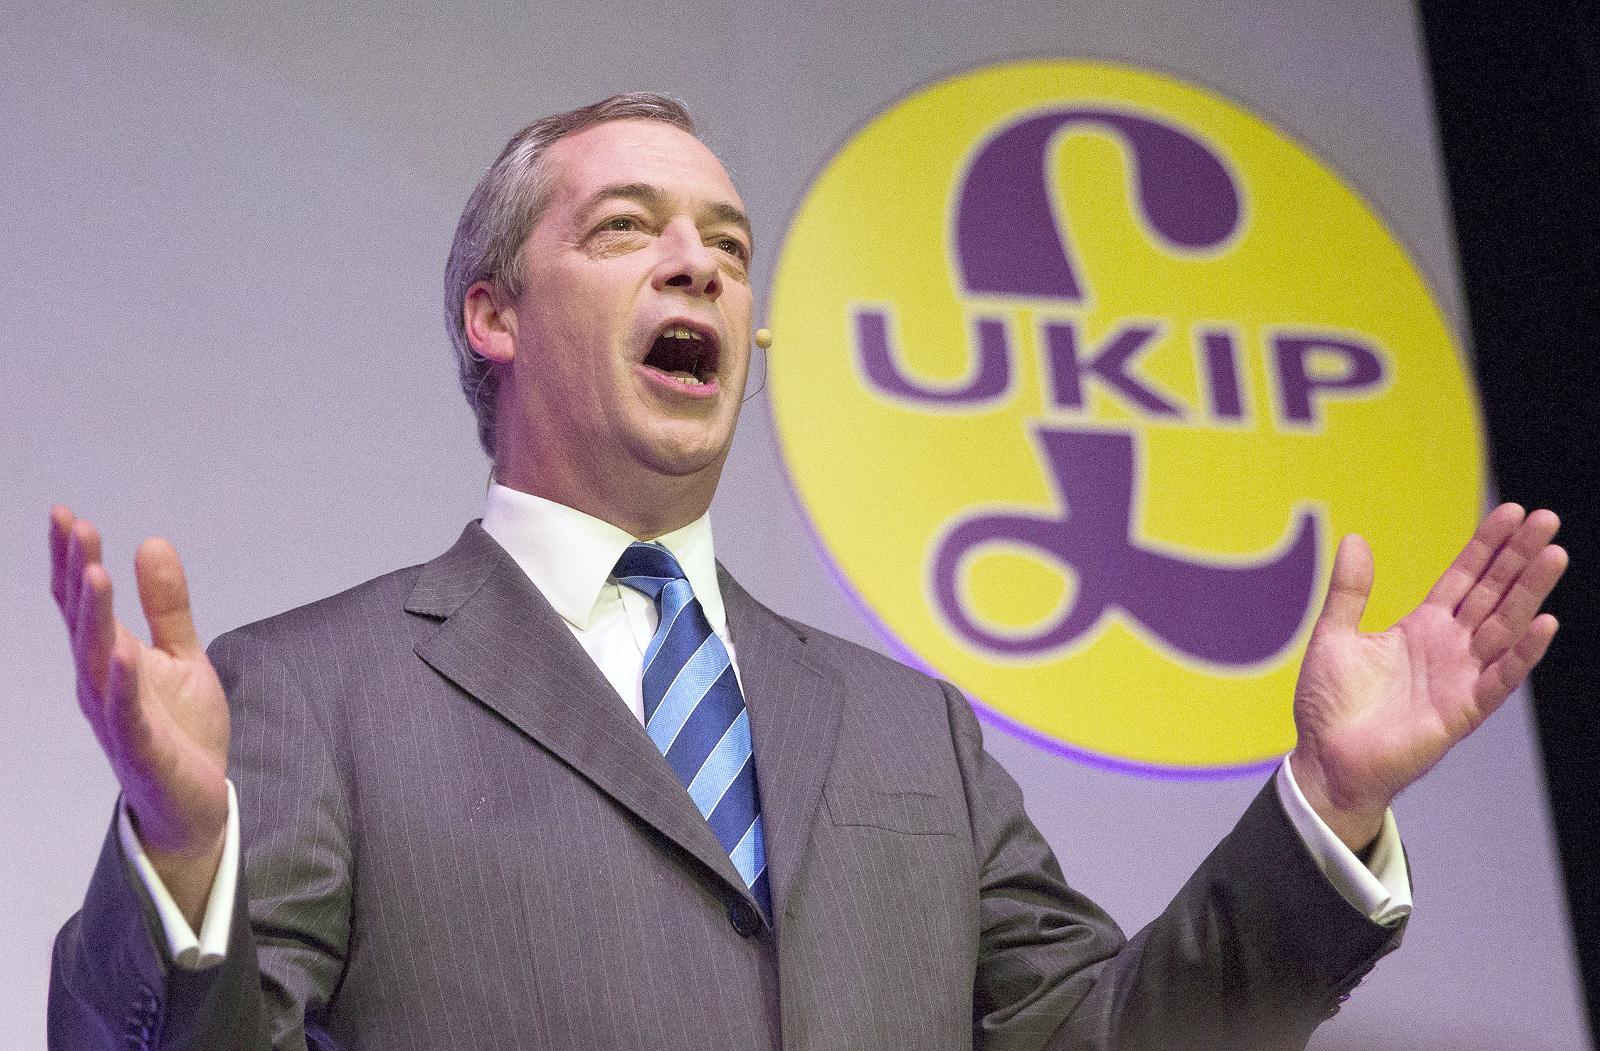 TREKKER SEG: Parlamentsmedlem Nigel Farage er leder for det EU-kritiske partiet UK Independence Party (UKIP). Nå trekker han seg.